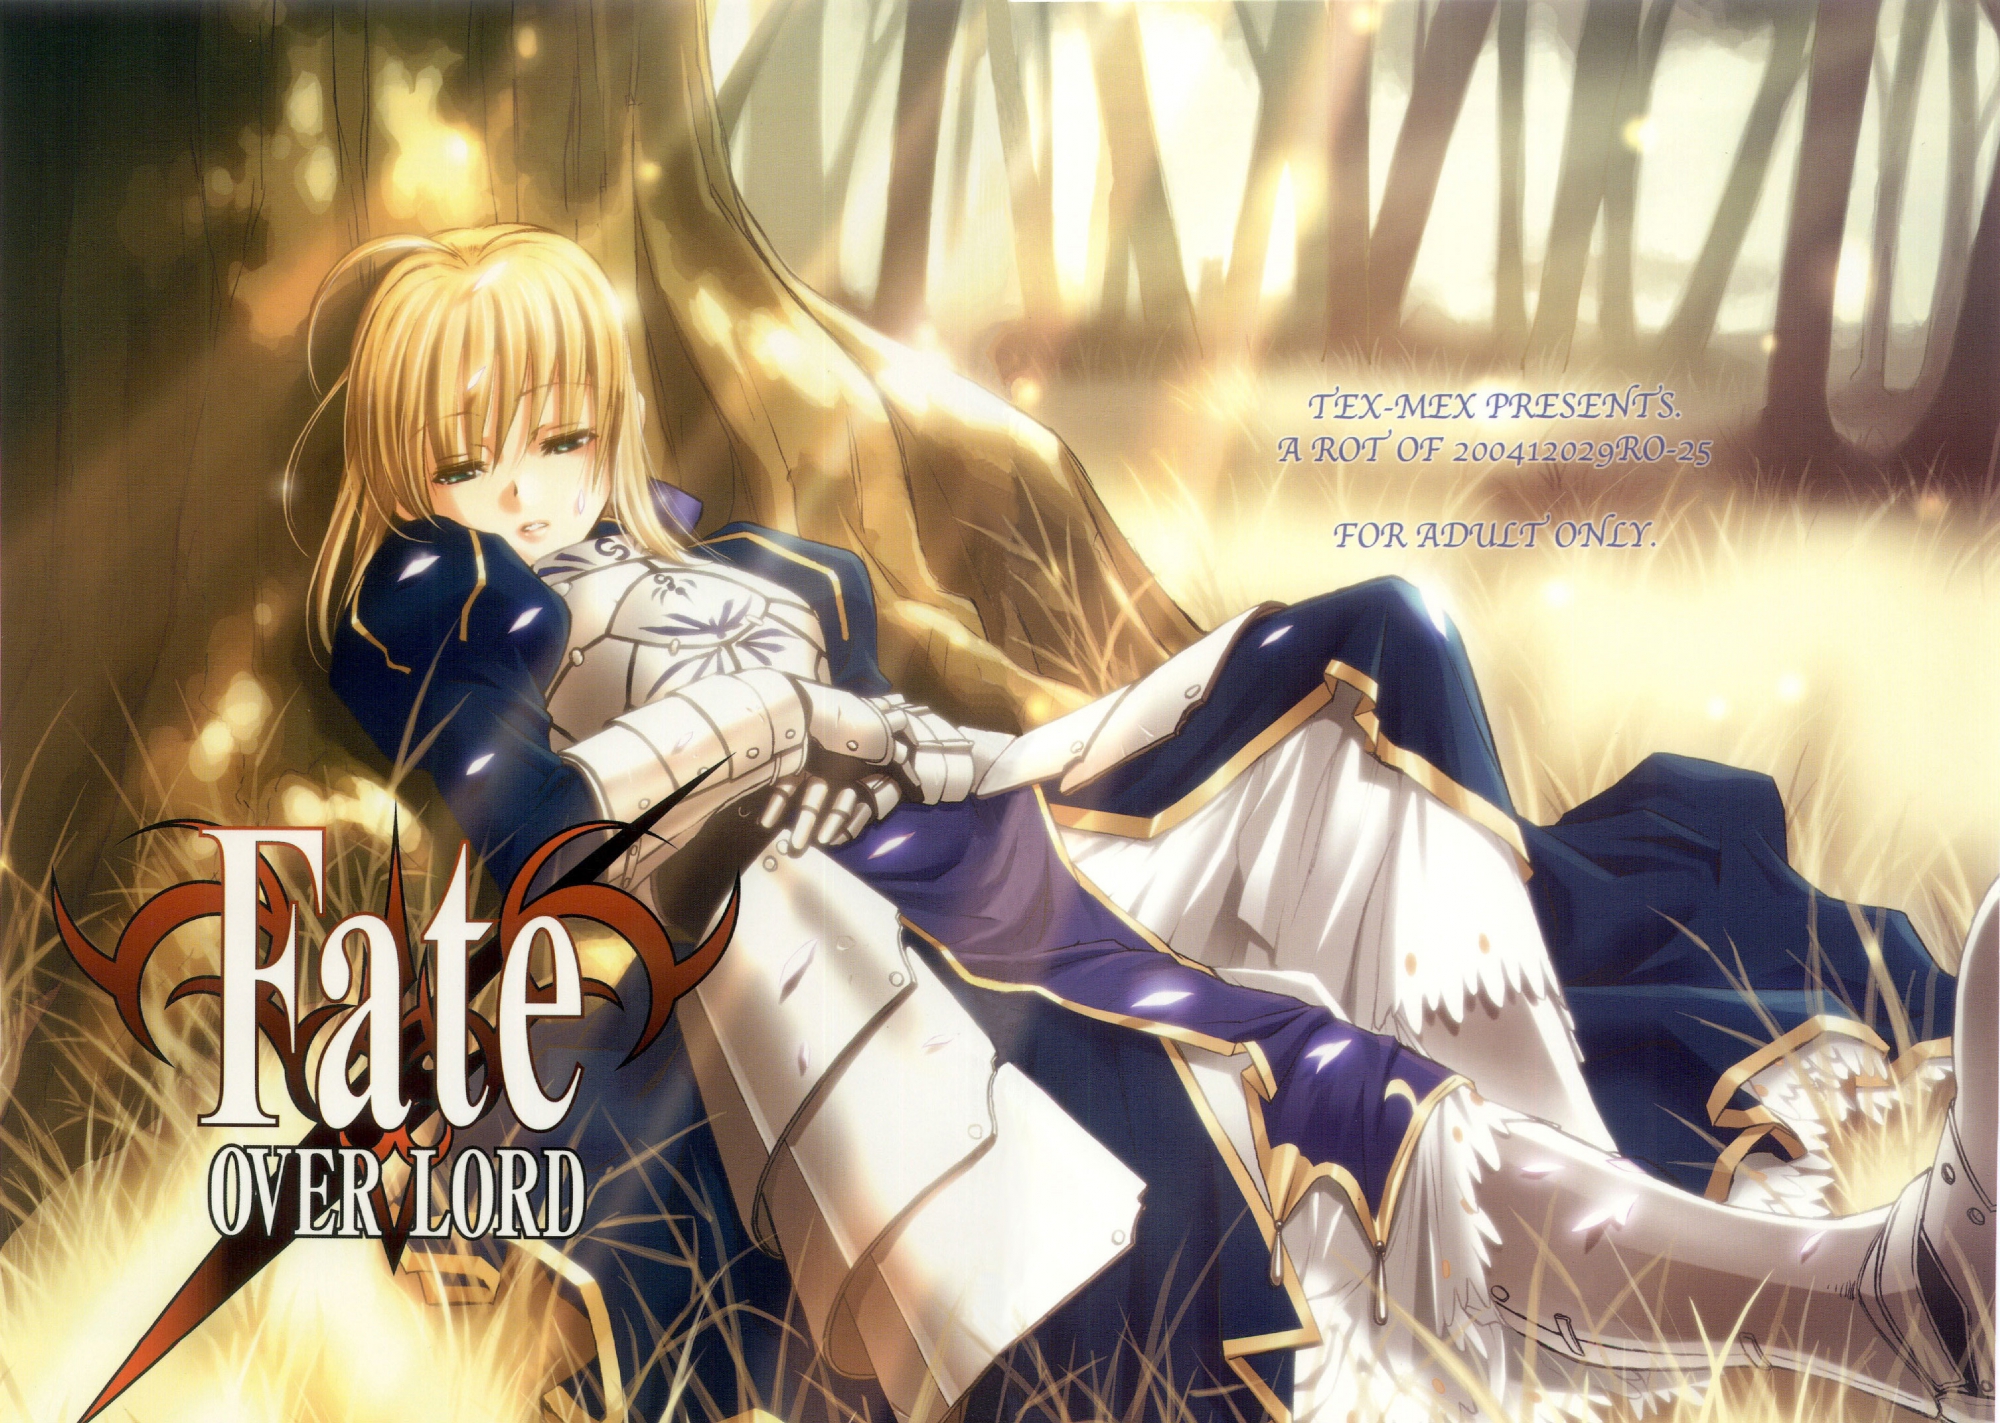 Saber ( Fate/Stay Night ) - Fate Stay Night Photo (24684528) - Fanpop